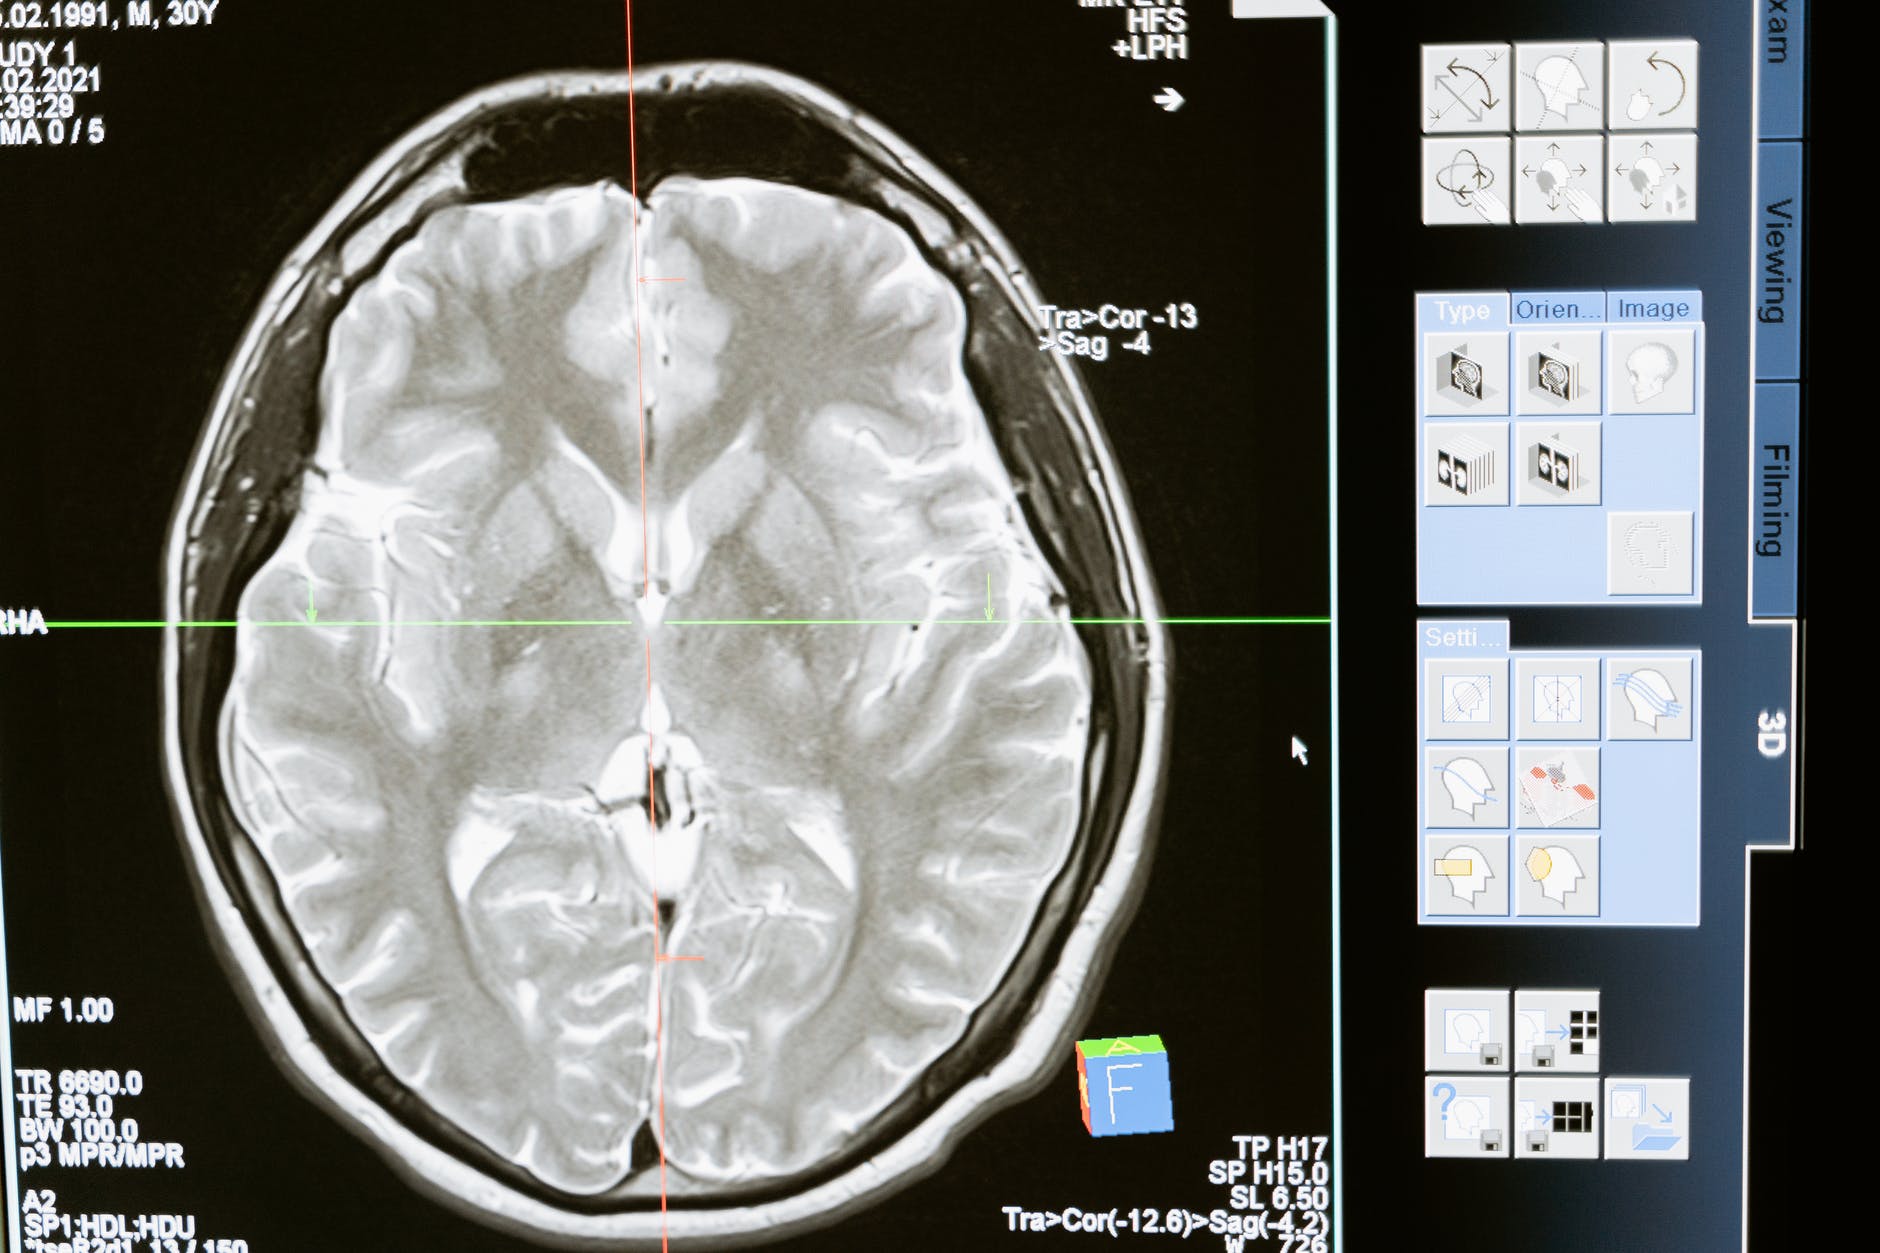 xray image of a brain